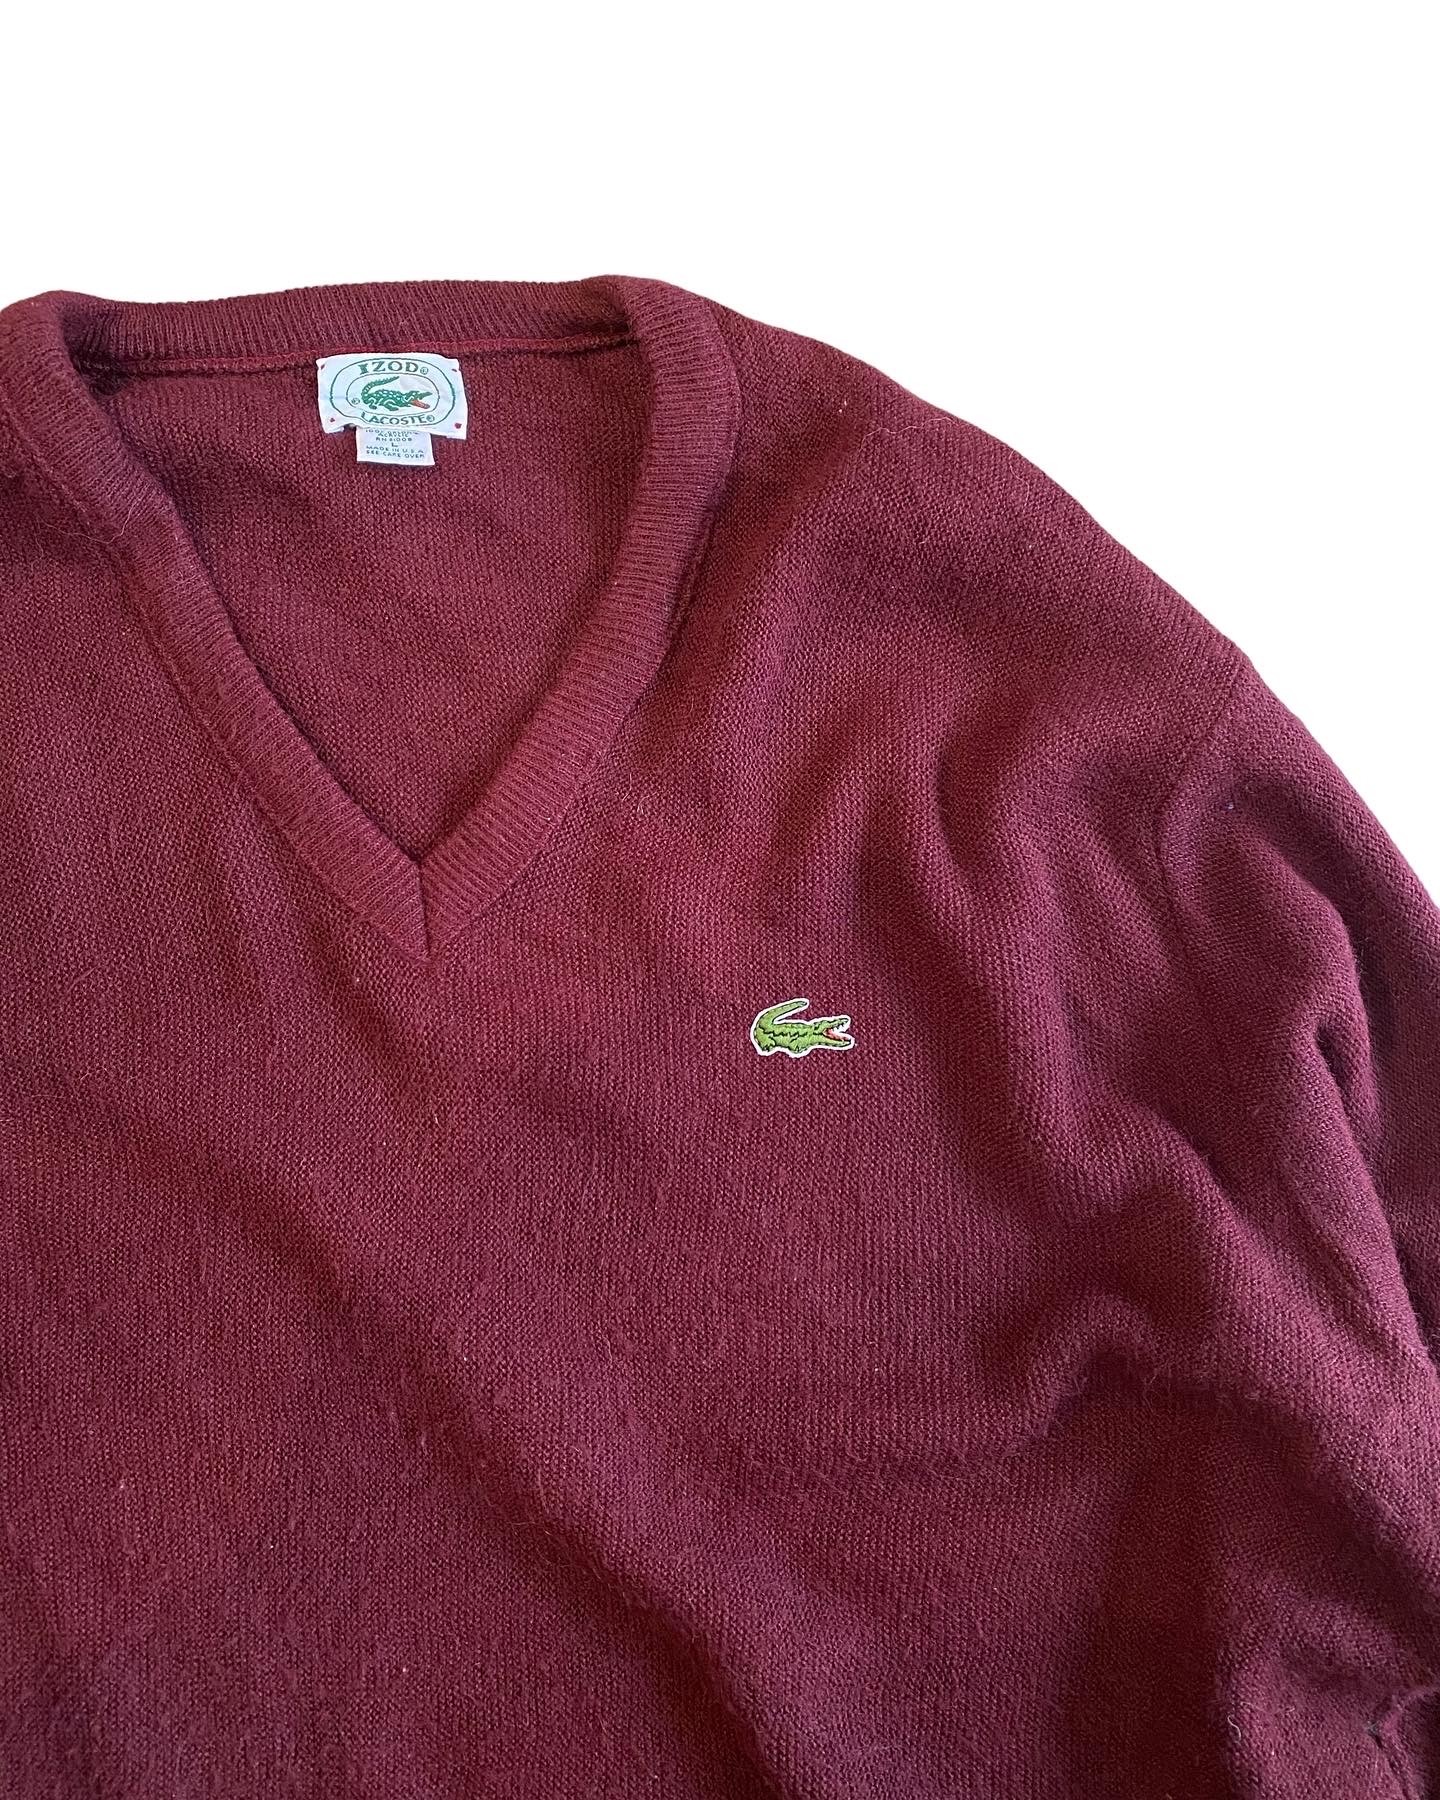 80's〜90's IZOD LACOSTE sweater USA製